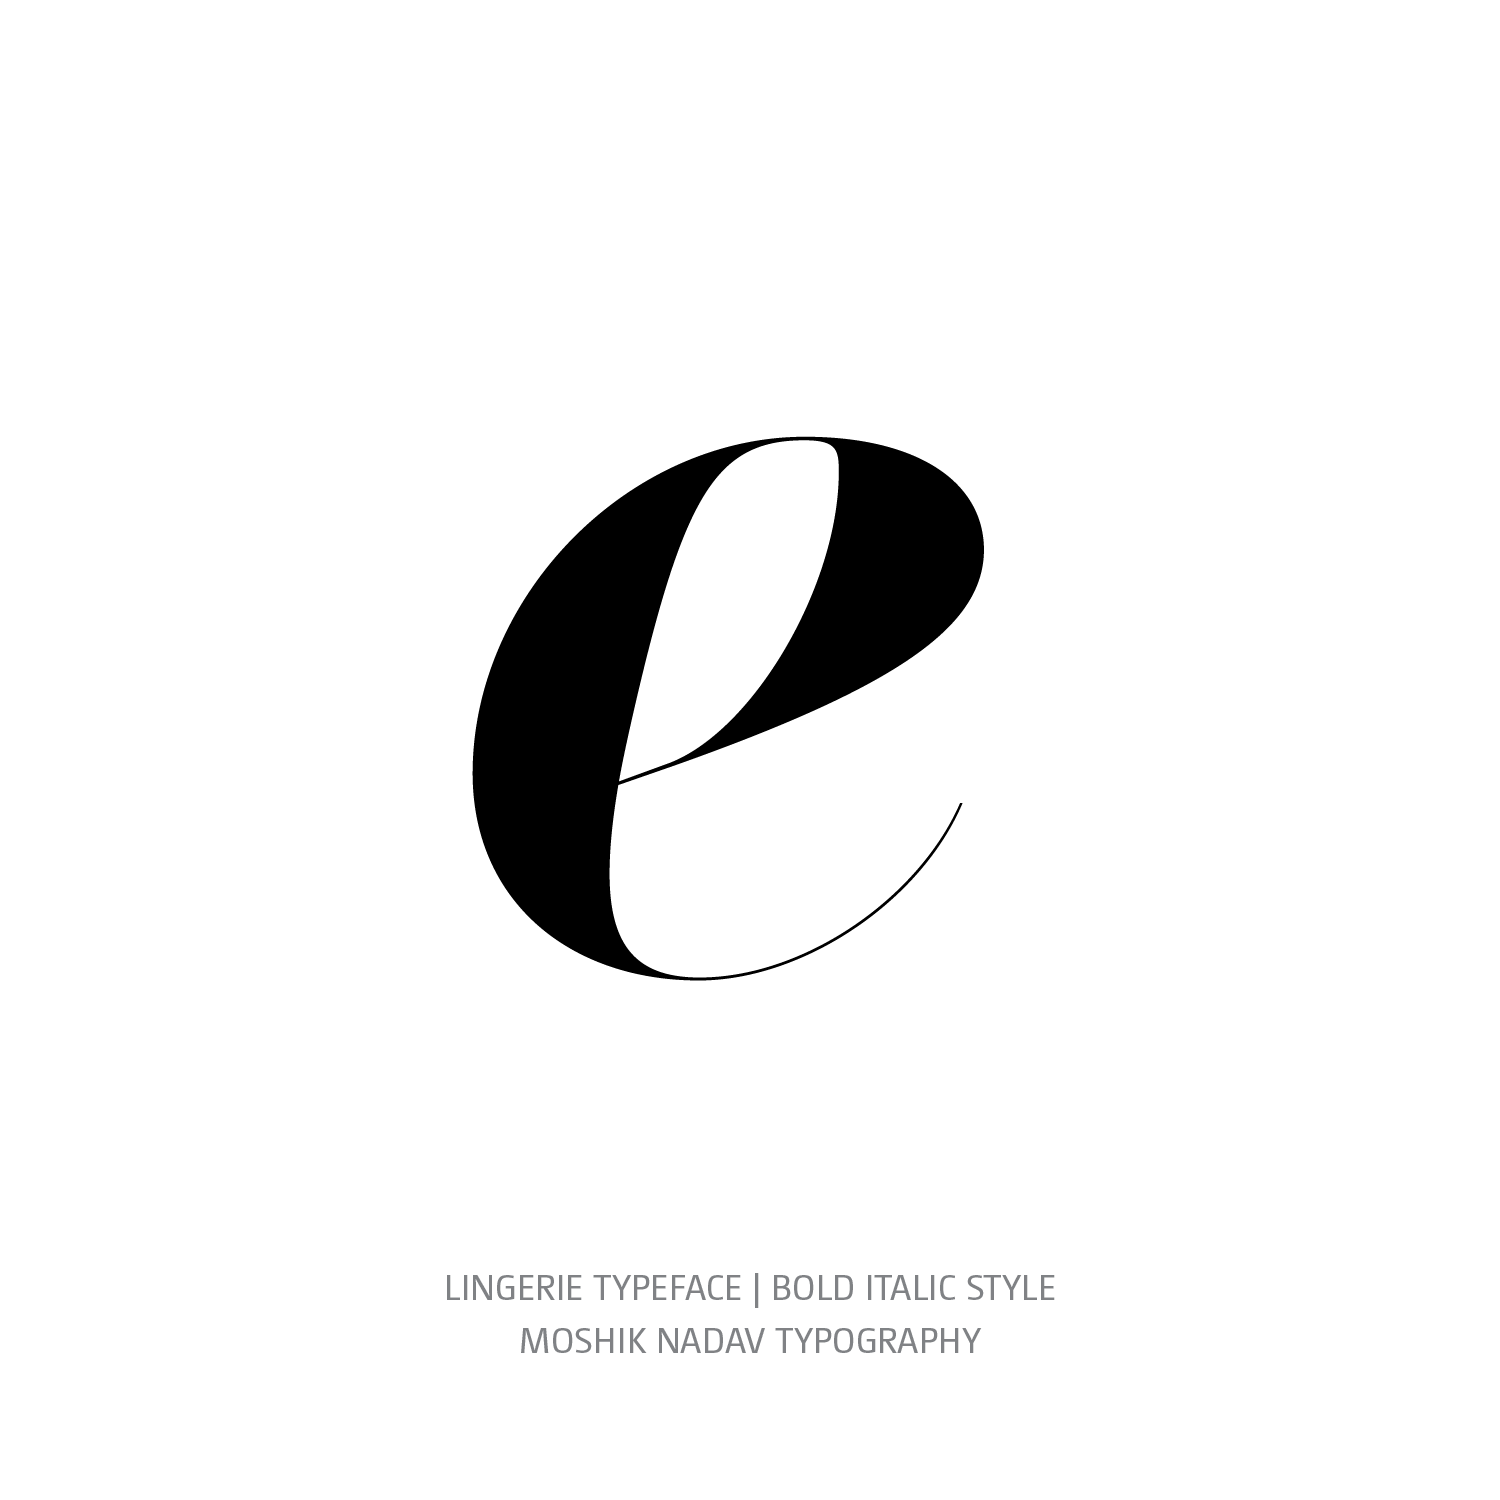 Lingerie Typeface Bold Italic e